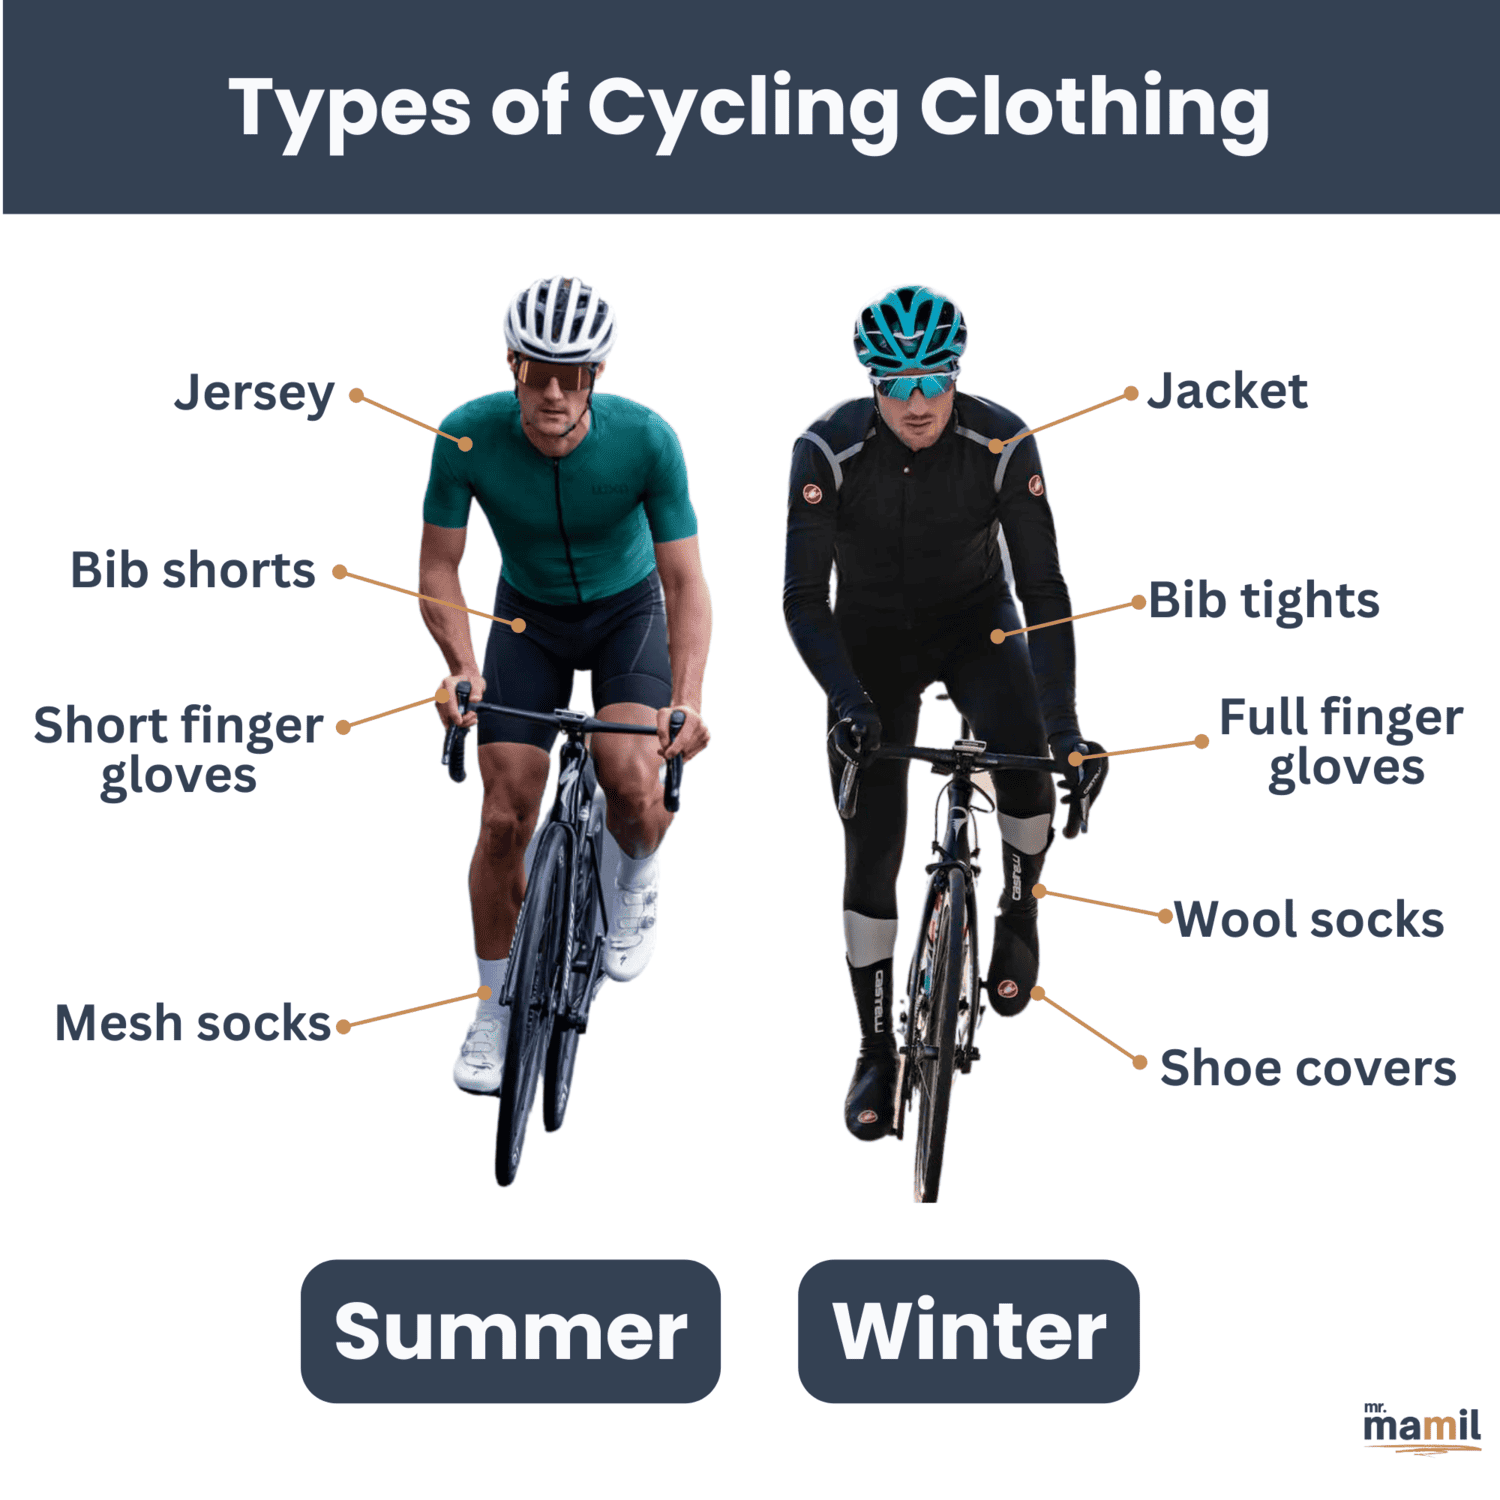 Summer vs Winter Cycling Clothing